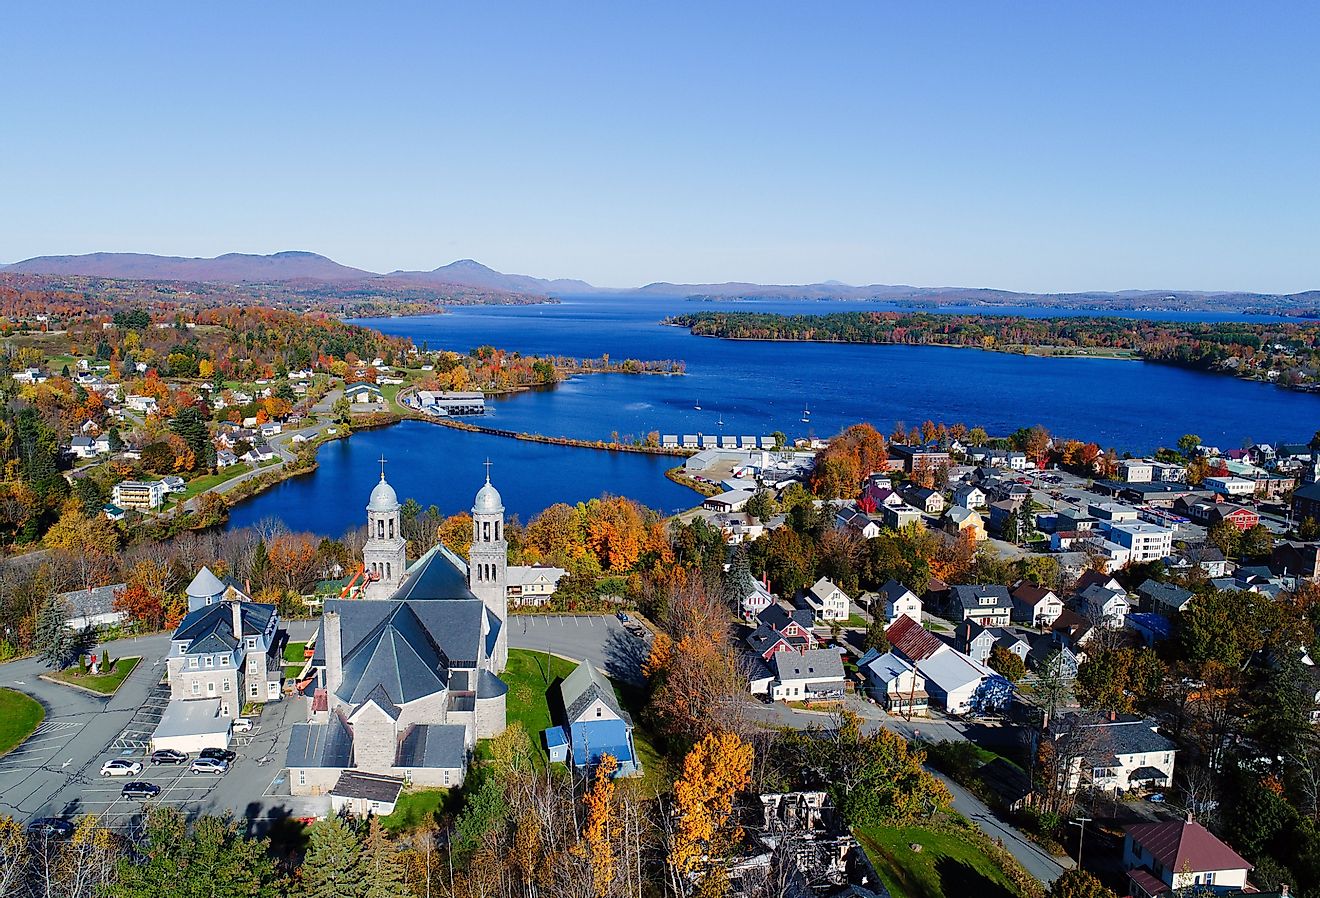 Newport, Vermont on Lake Memphremagog.